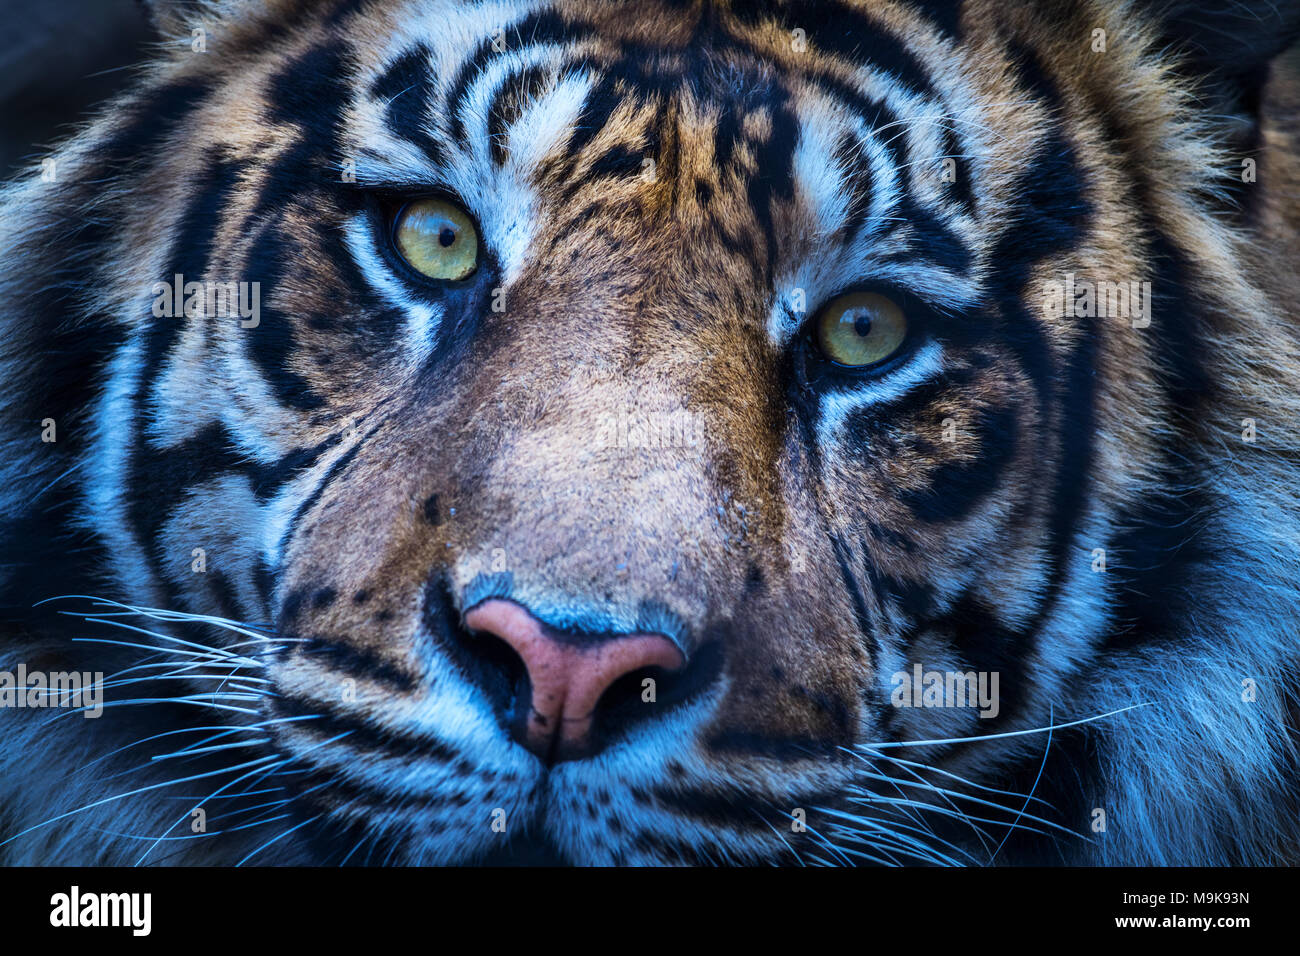 tiger close up Stock Photo